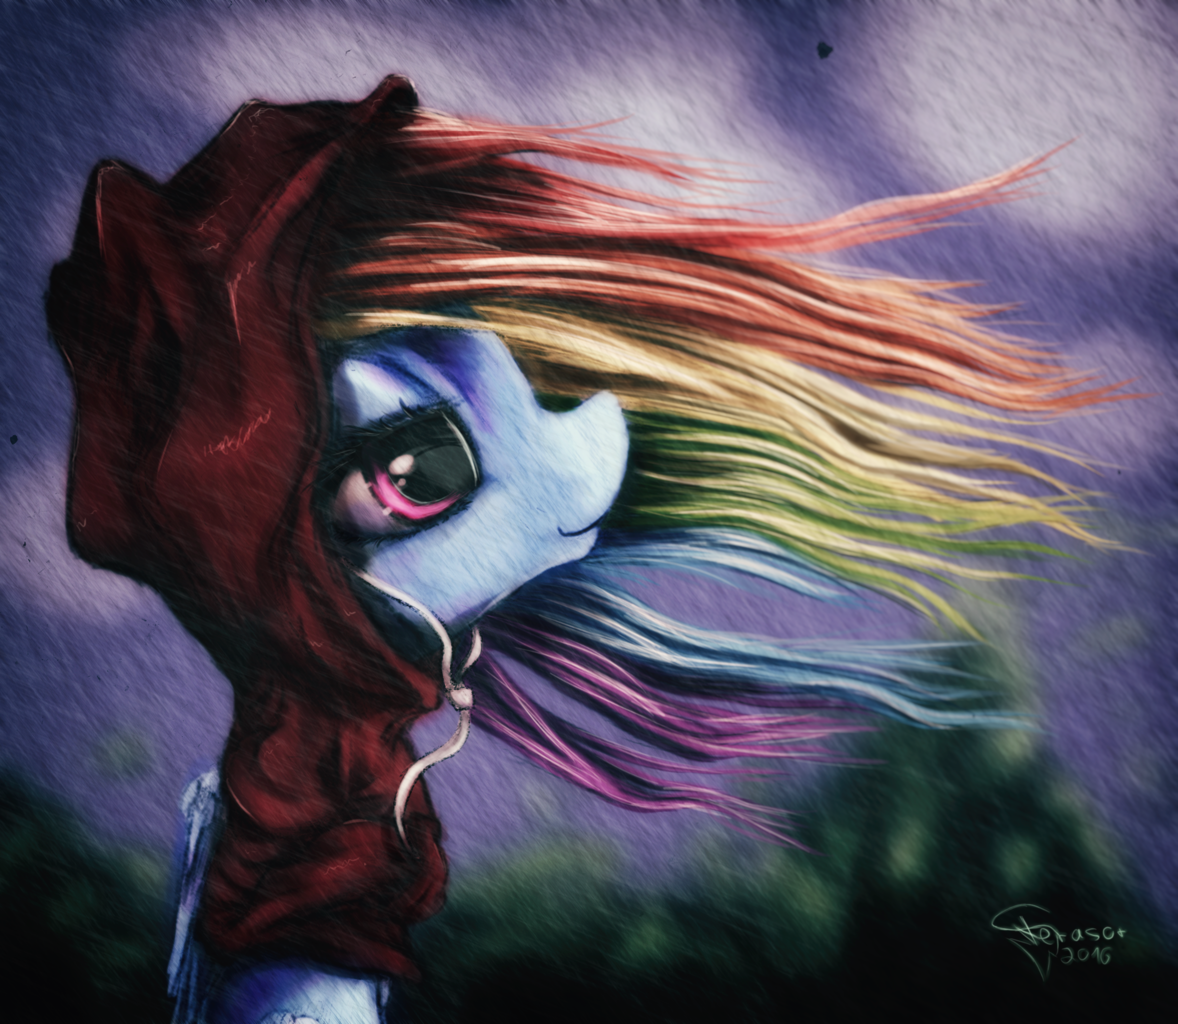 A little stormy - My little pony, Rainbow dash